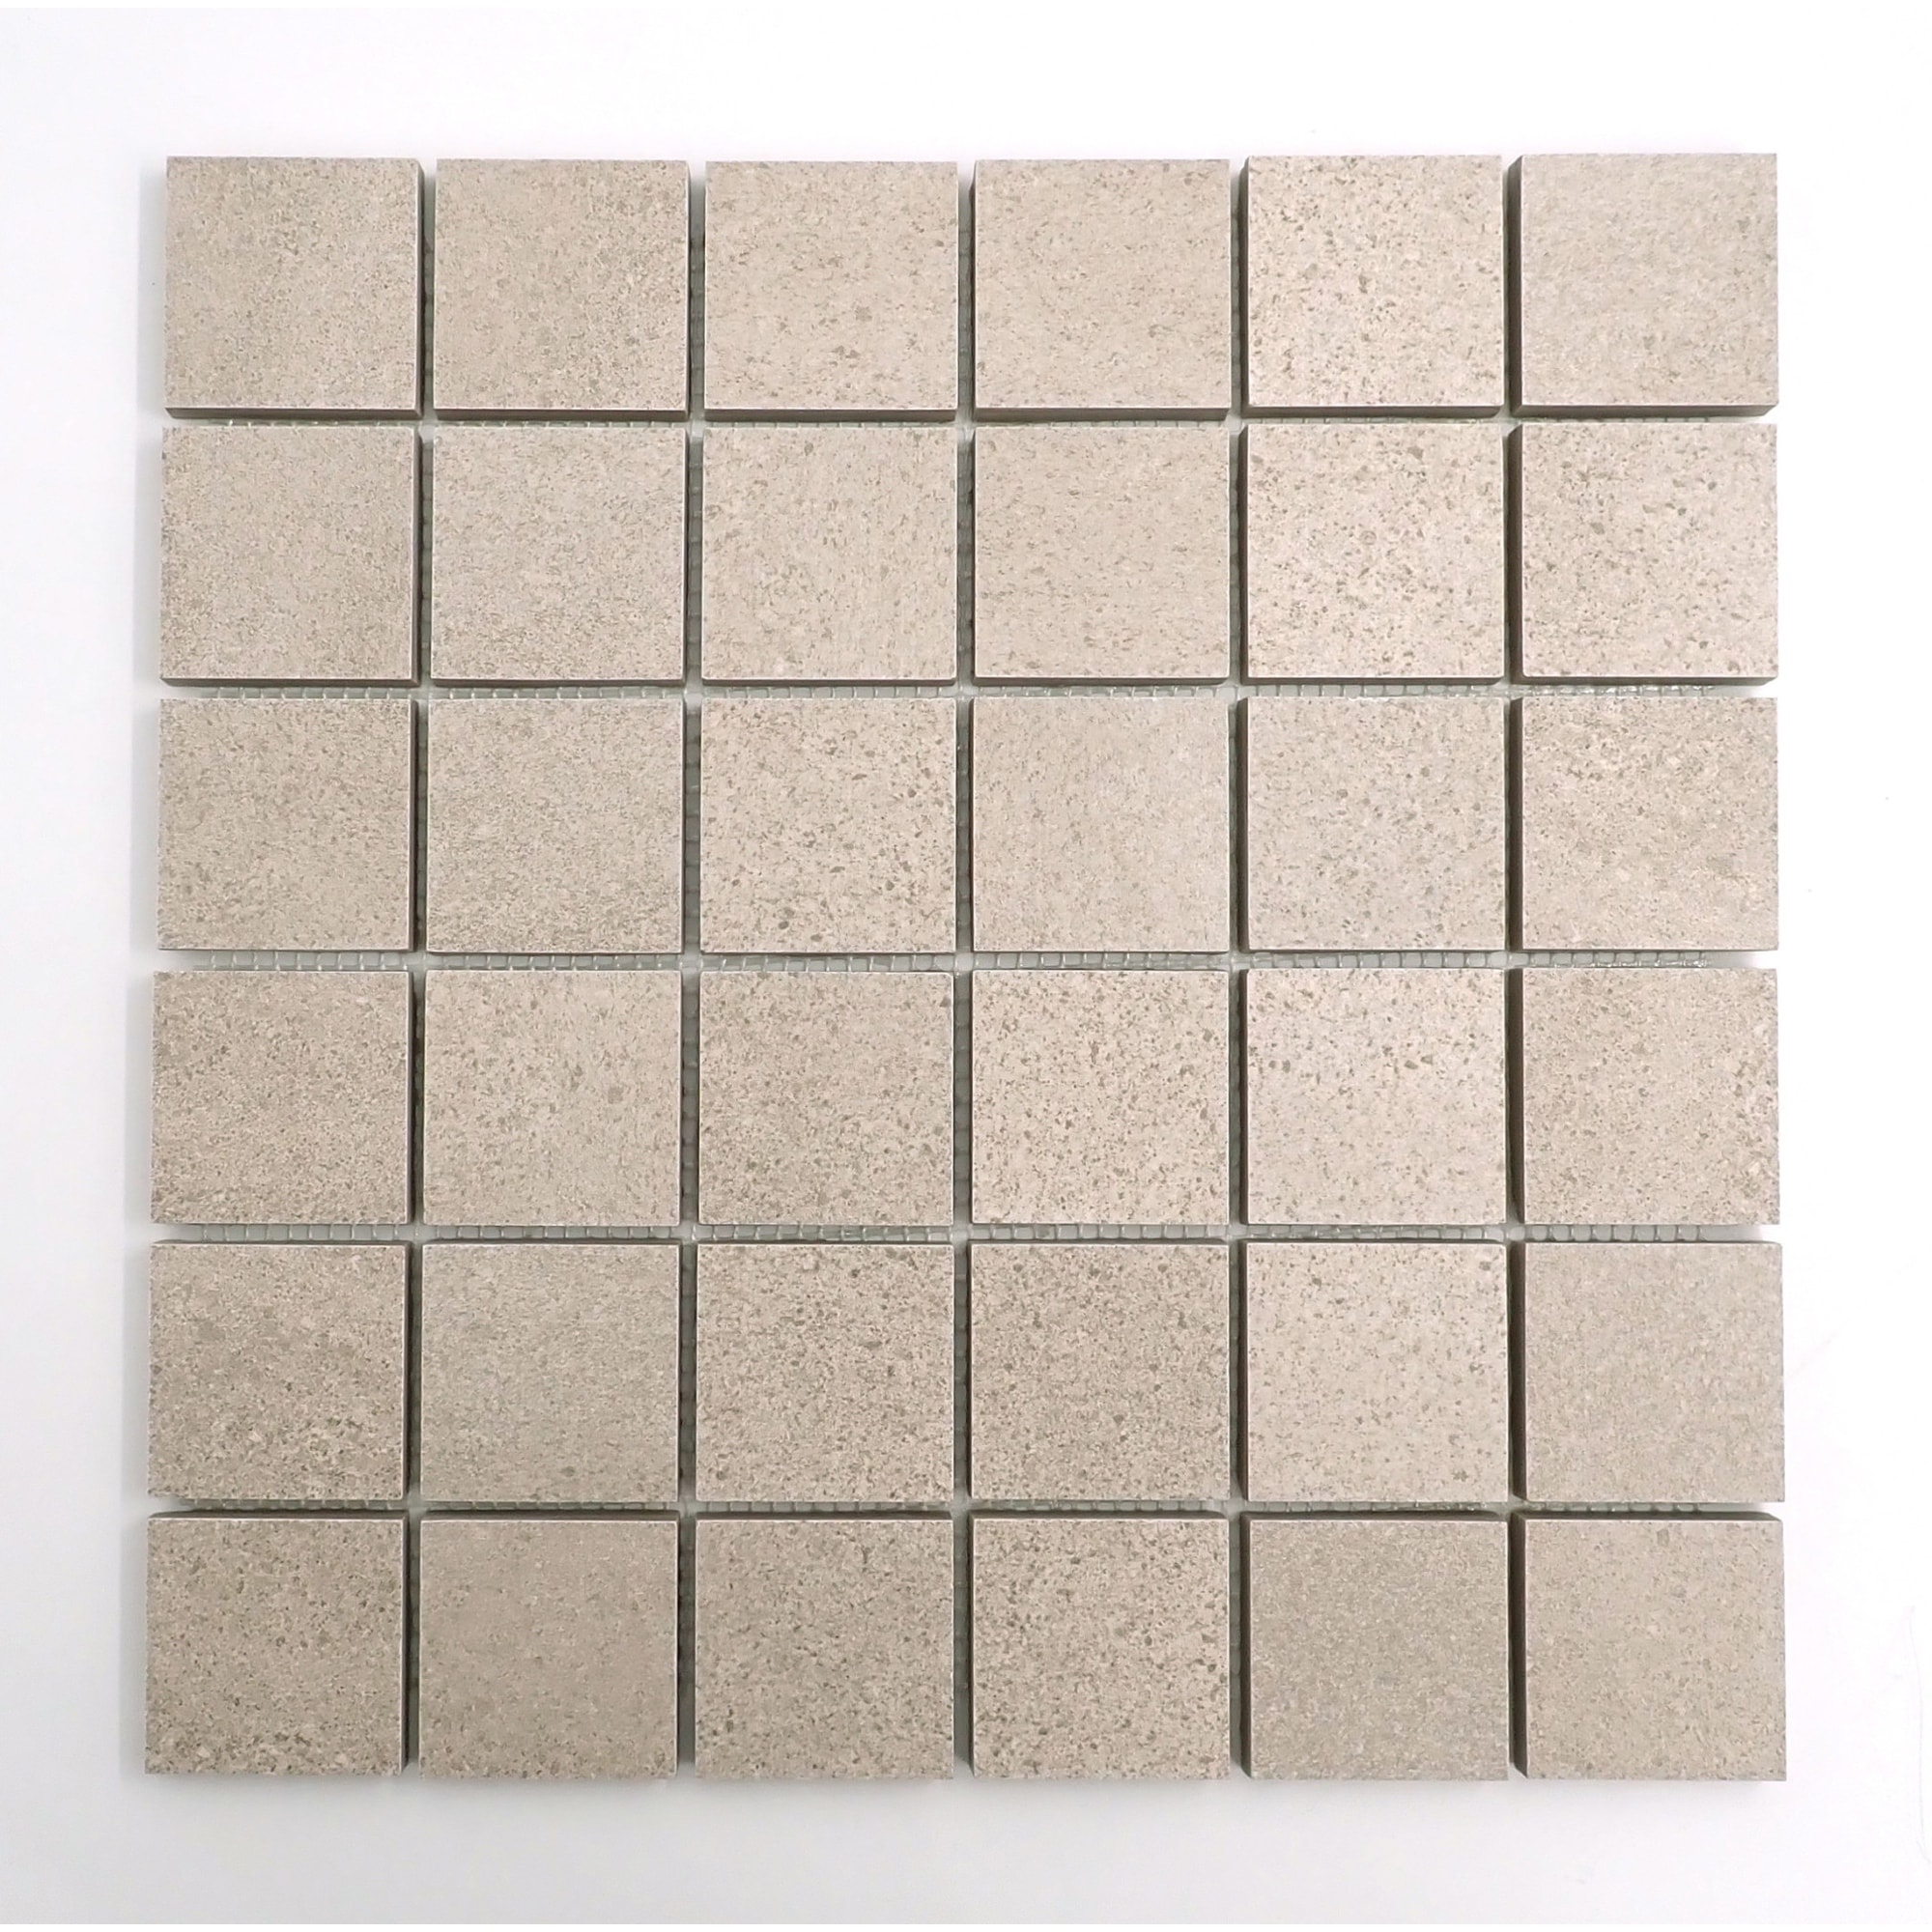 Emser Tile Access II™ 12 x 12 Porcelain Grid Mosaic Wall & Floor Tile